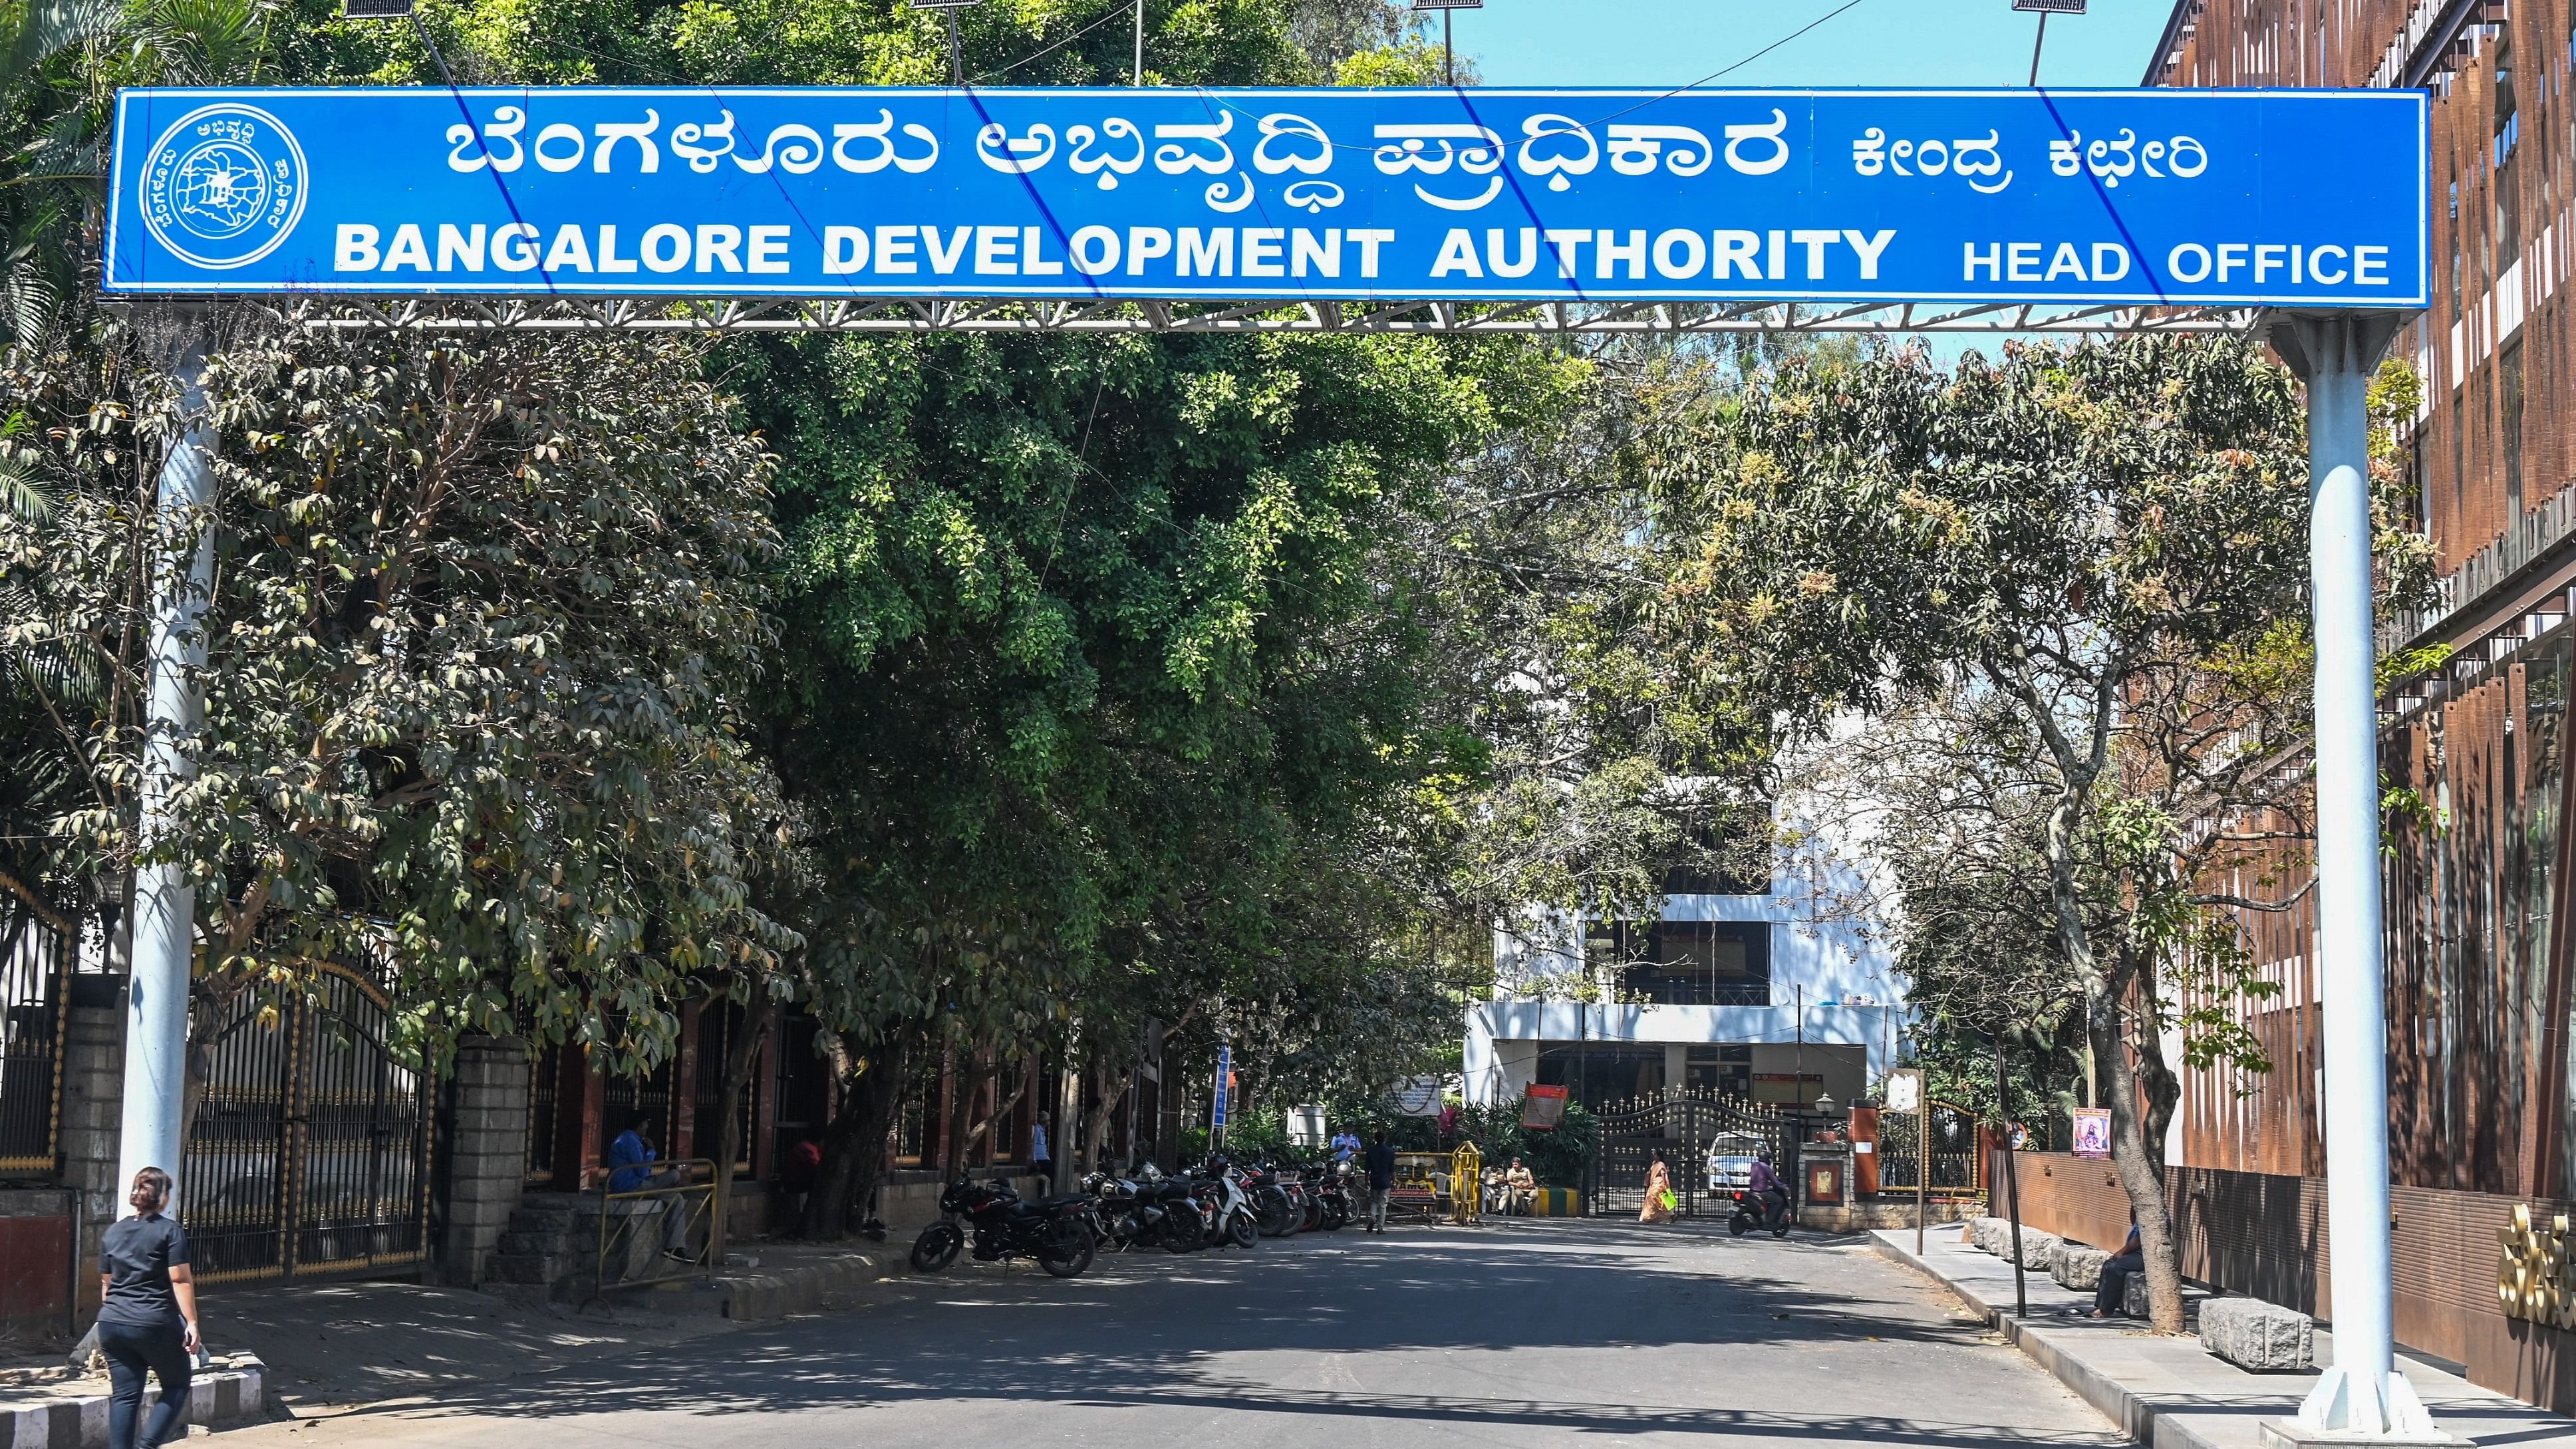 <div class="paragraphs"><p>A view of&nbsp;Bengaluru Development Authority (BDA) office</p></div>